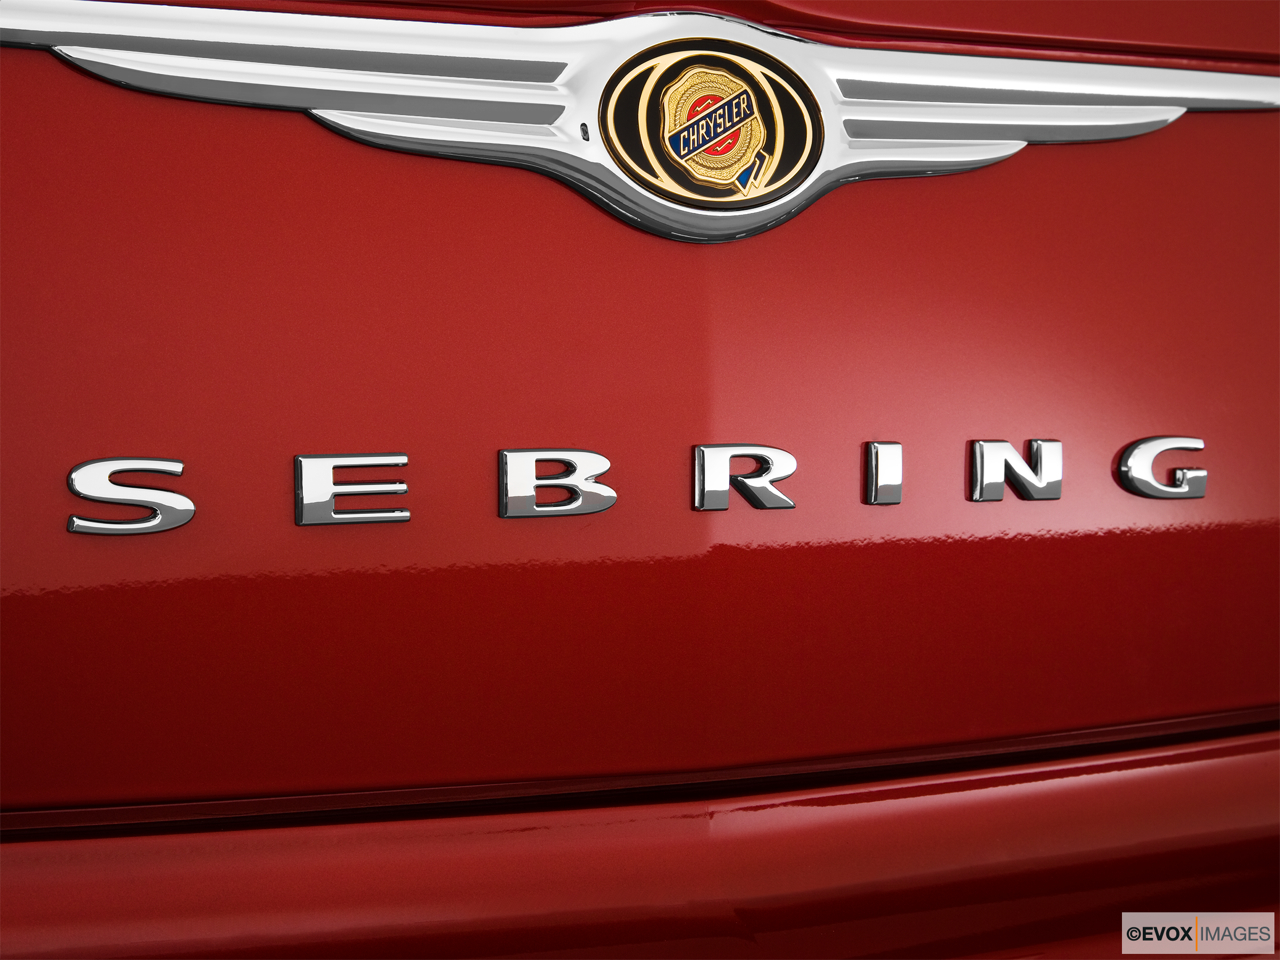 2010 Chrysler Sebring Touring Rear model badge/emblem 